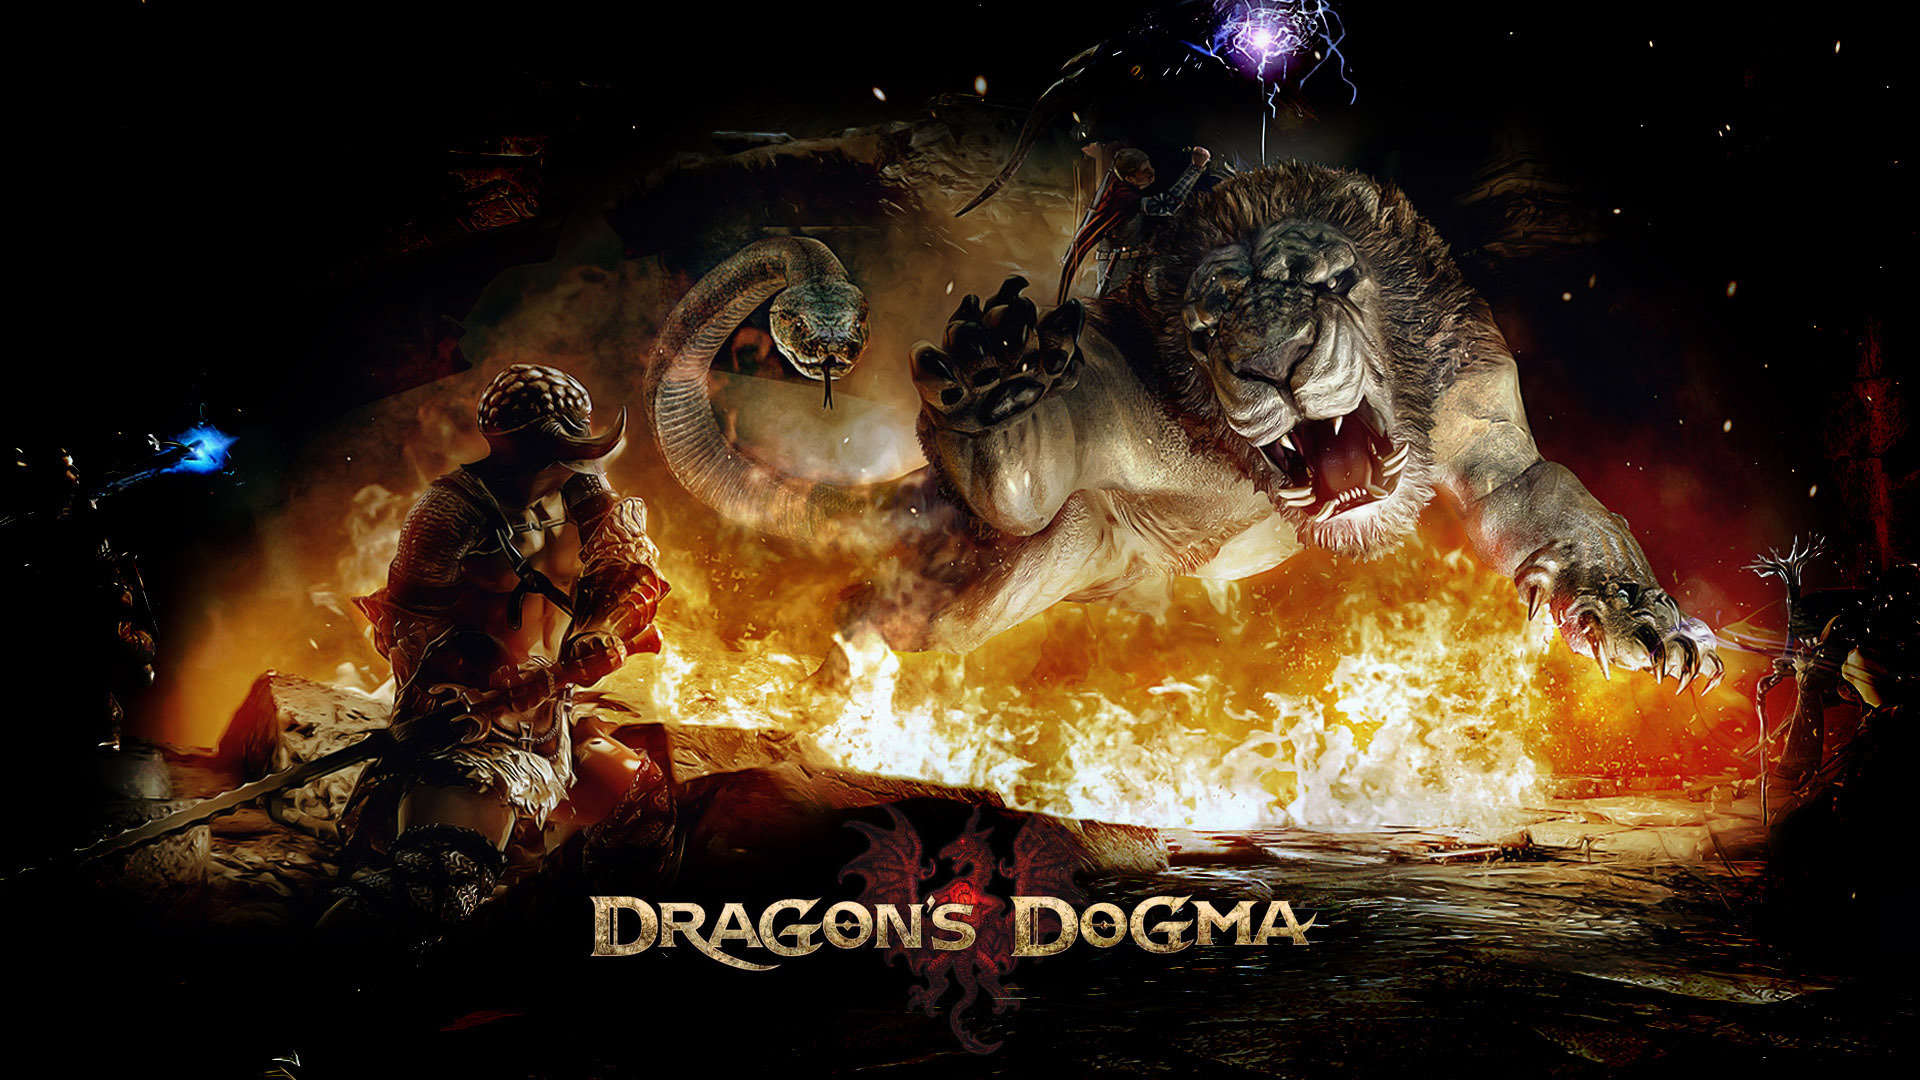 Best Dragon's Dogma: Dark Arisen wallpaper ID:84192 for High Resolution full hd 1920x1080 desktop